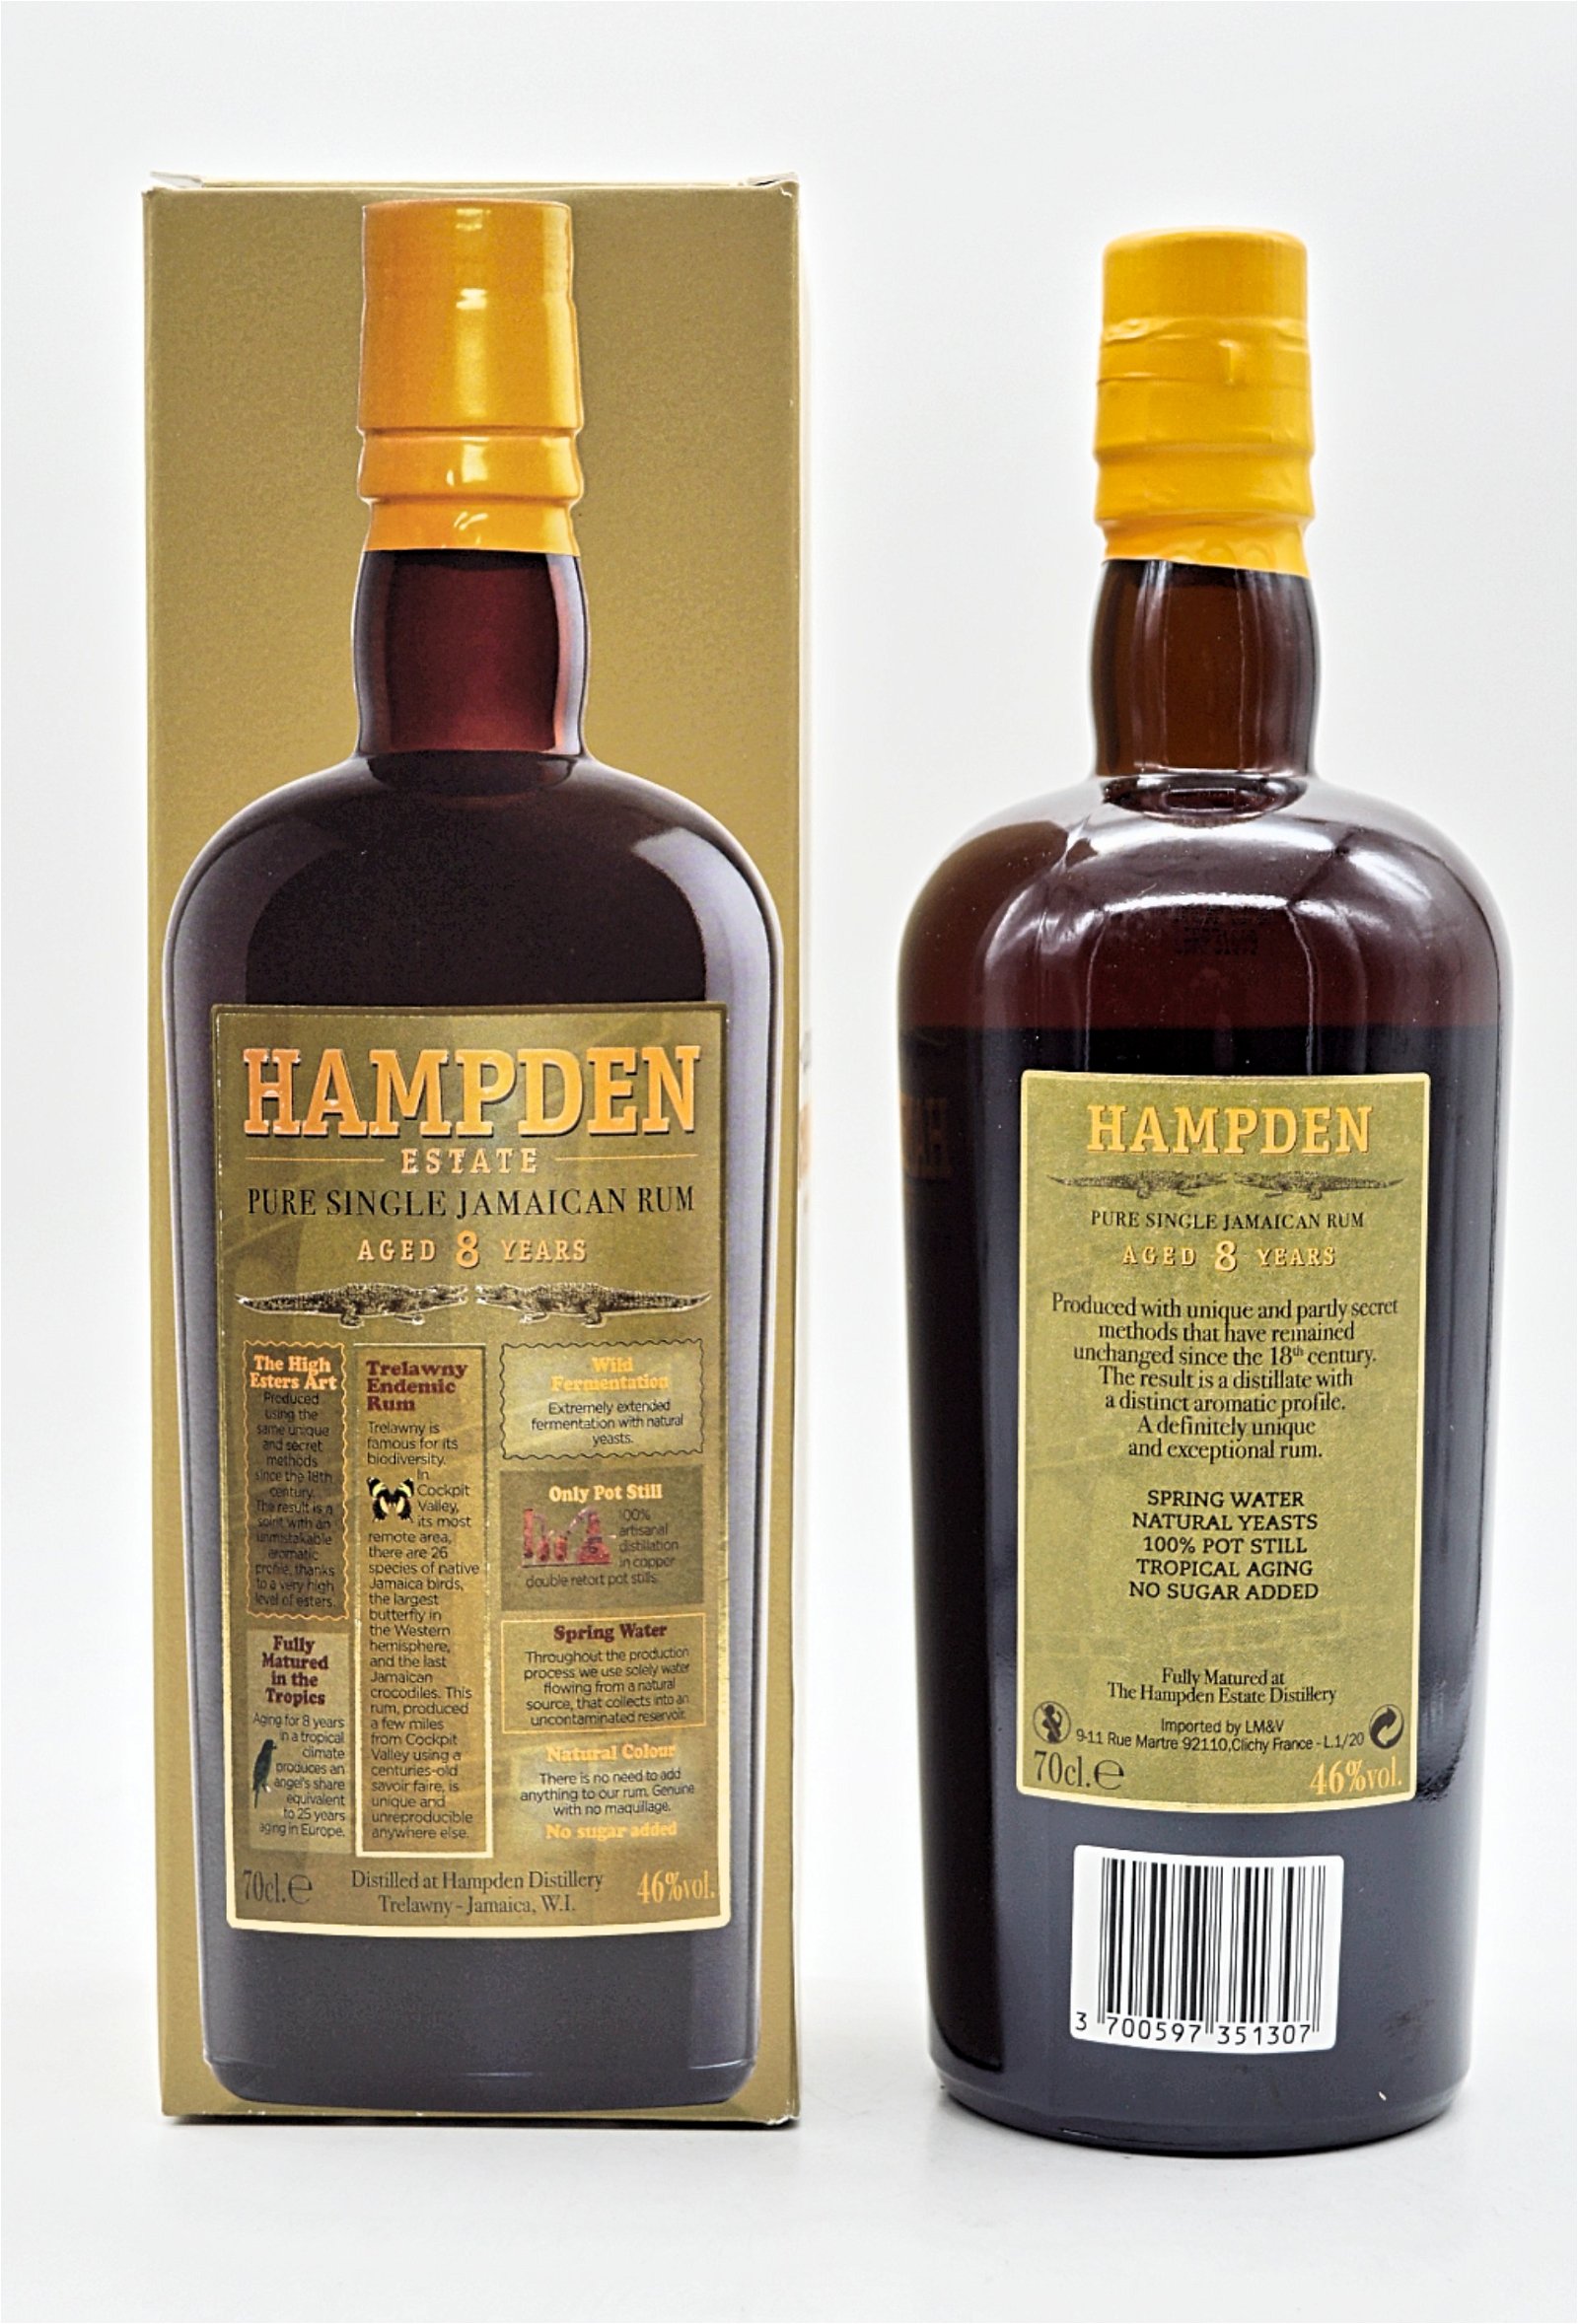 The Hampden 8 Jahre Pure Single Jamaican Rum